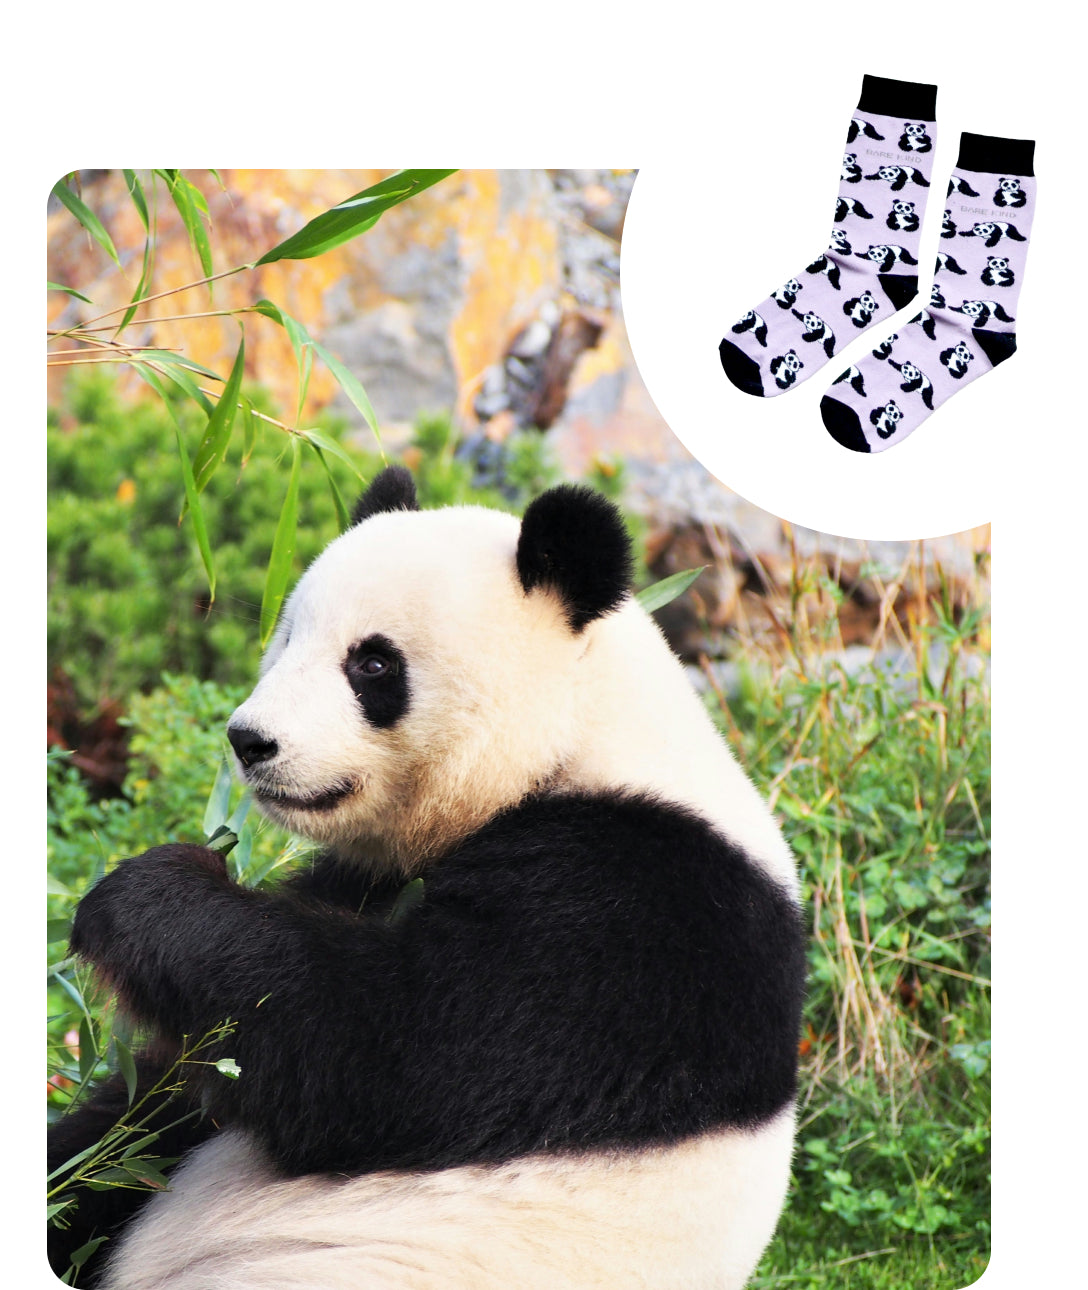 panda image and panda bamboo socks